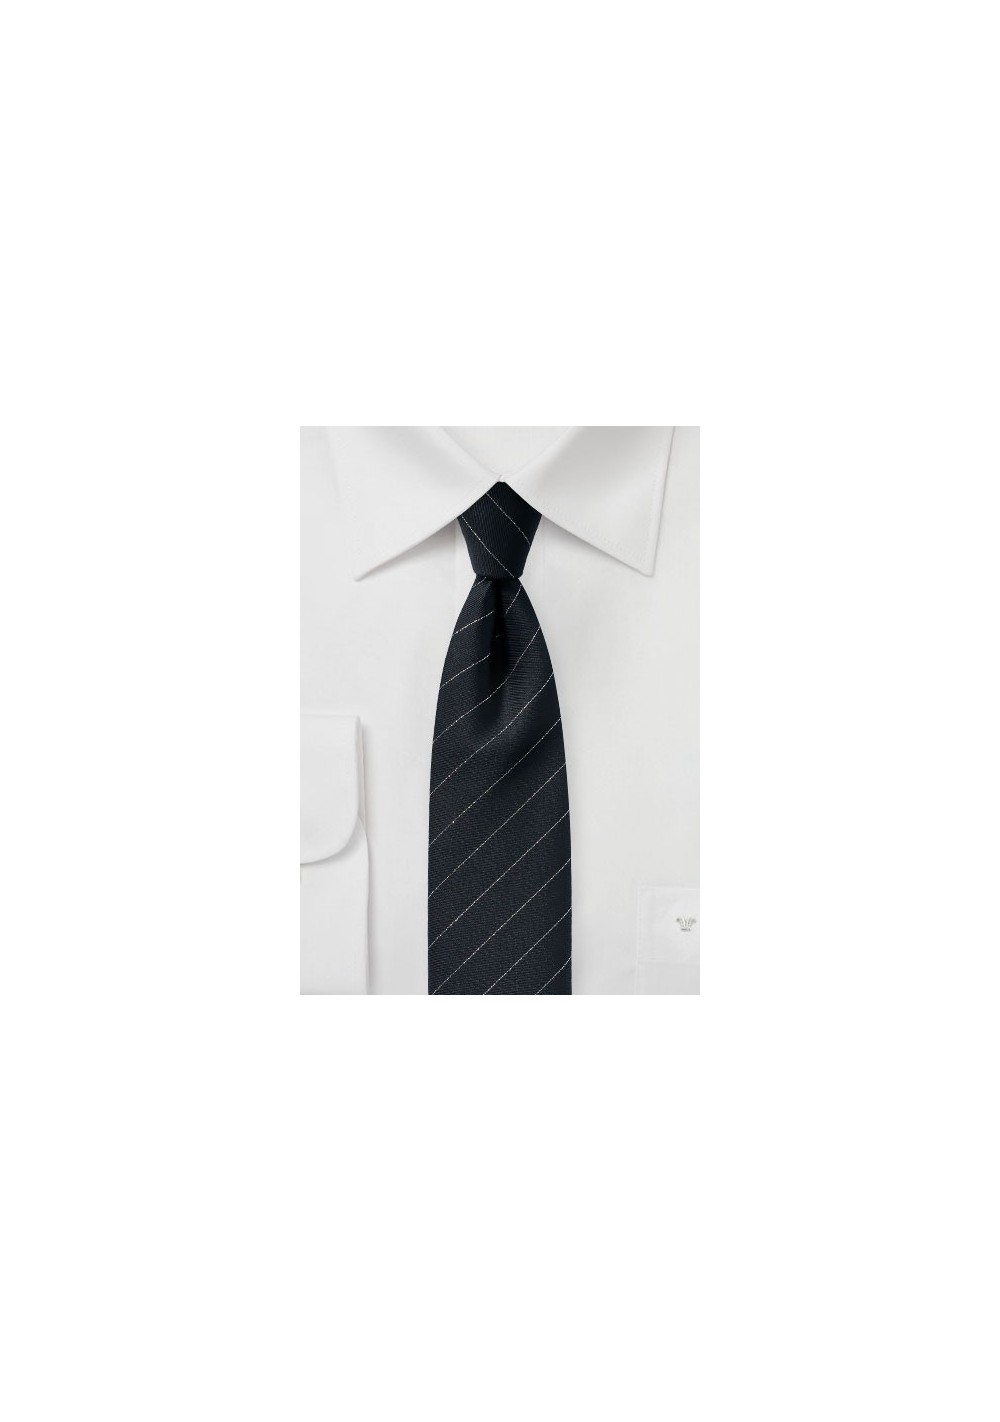 Trendy Designer Skinny Tie in Black and Metallic Silver